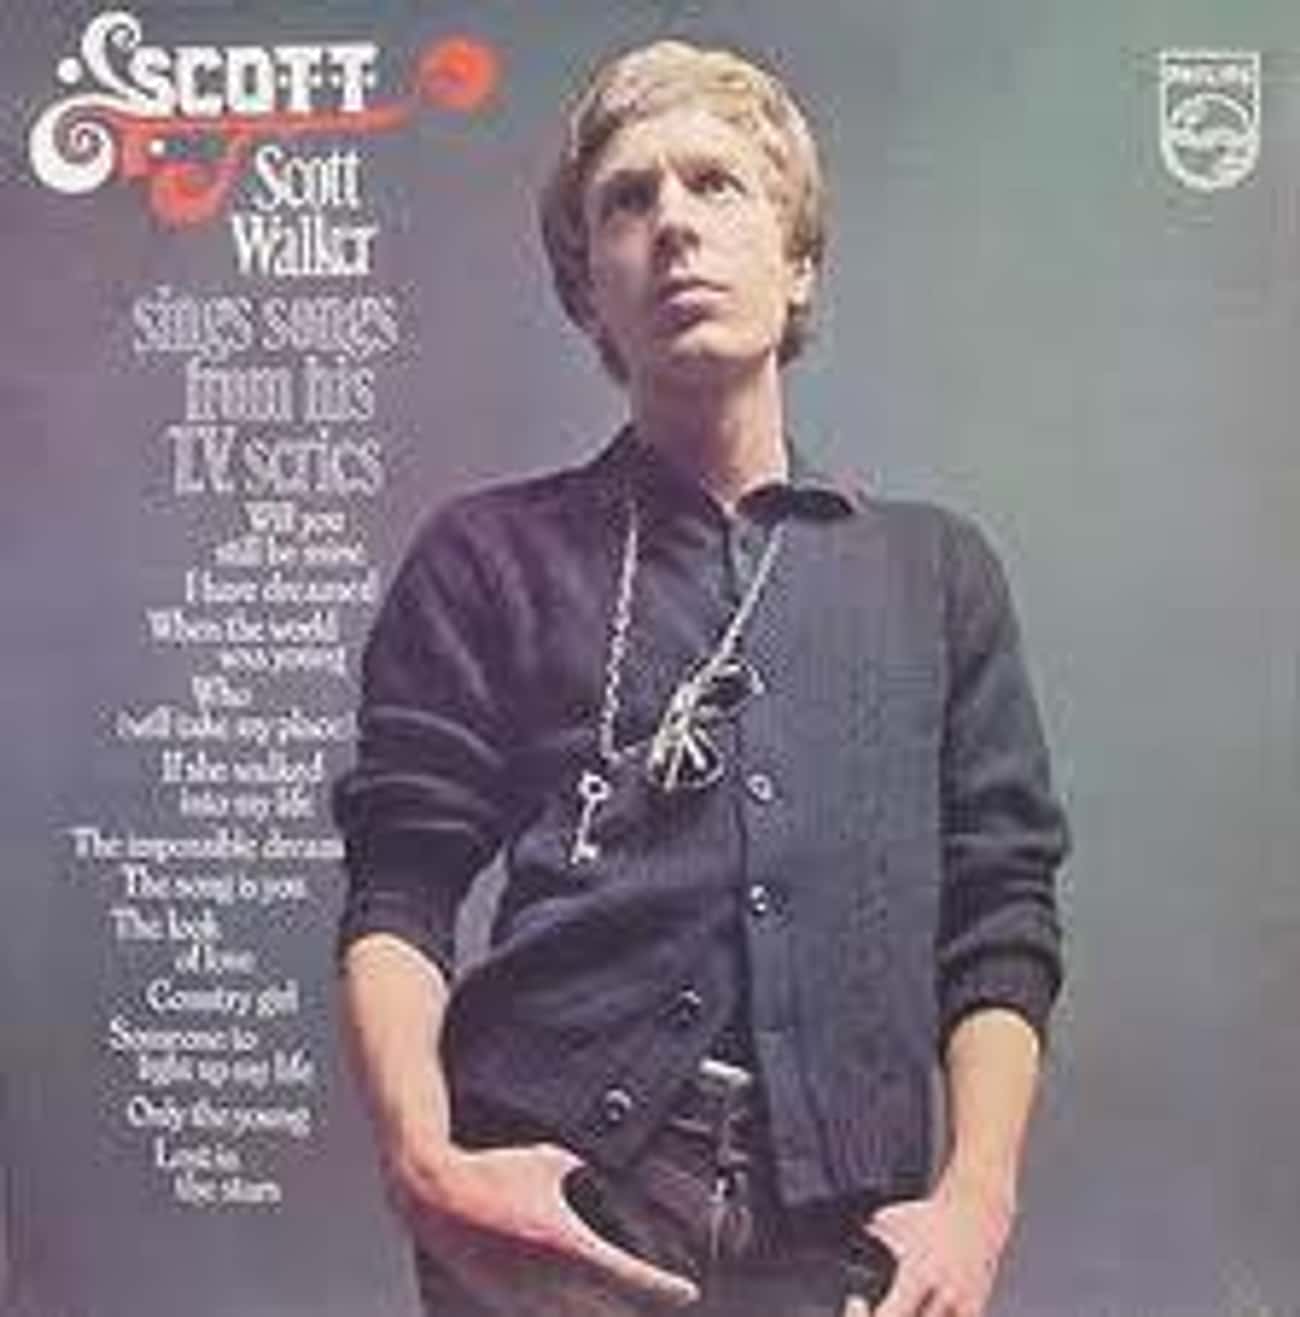 Scott: Scott Walker Sings Songs from his T.V. Series